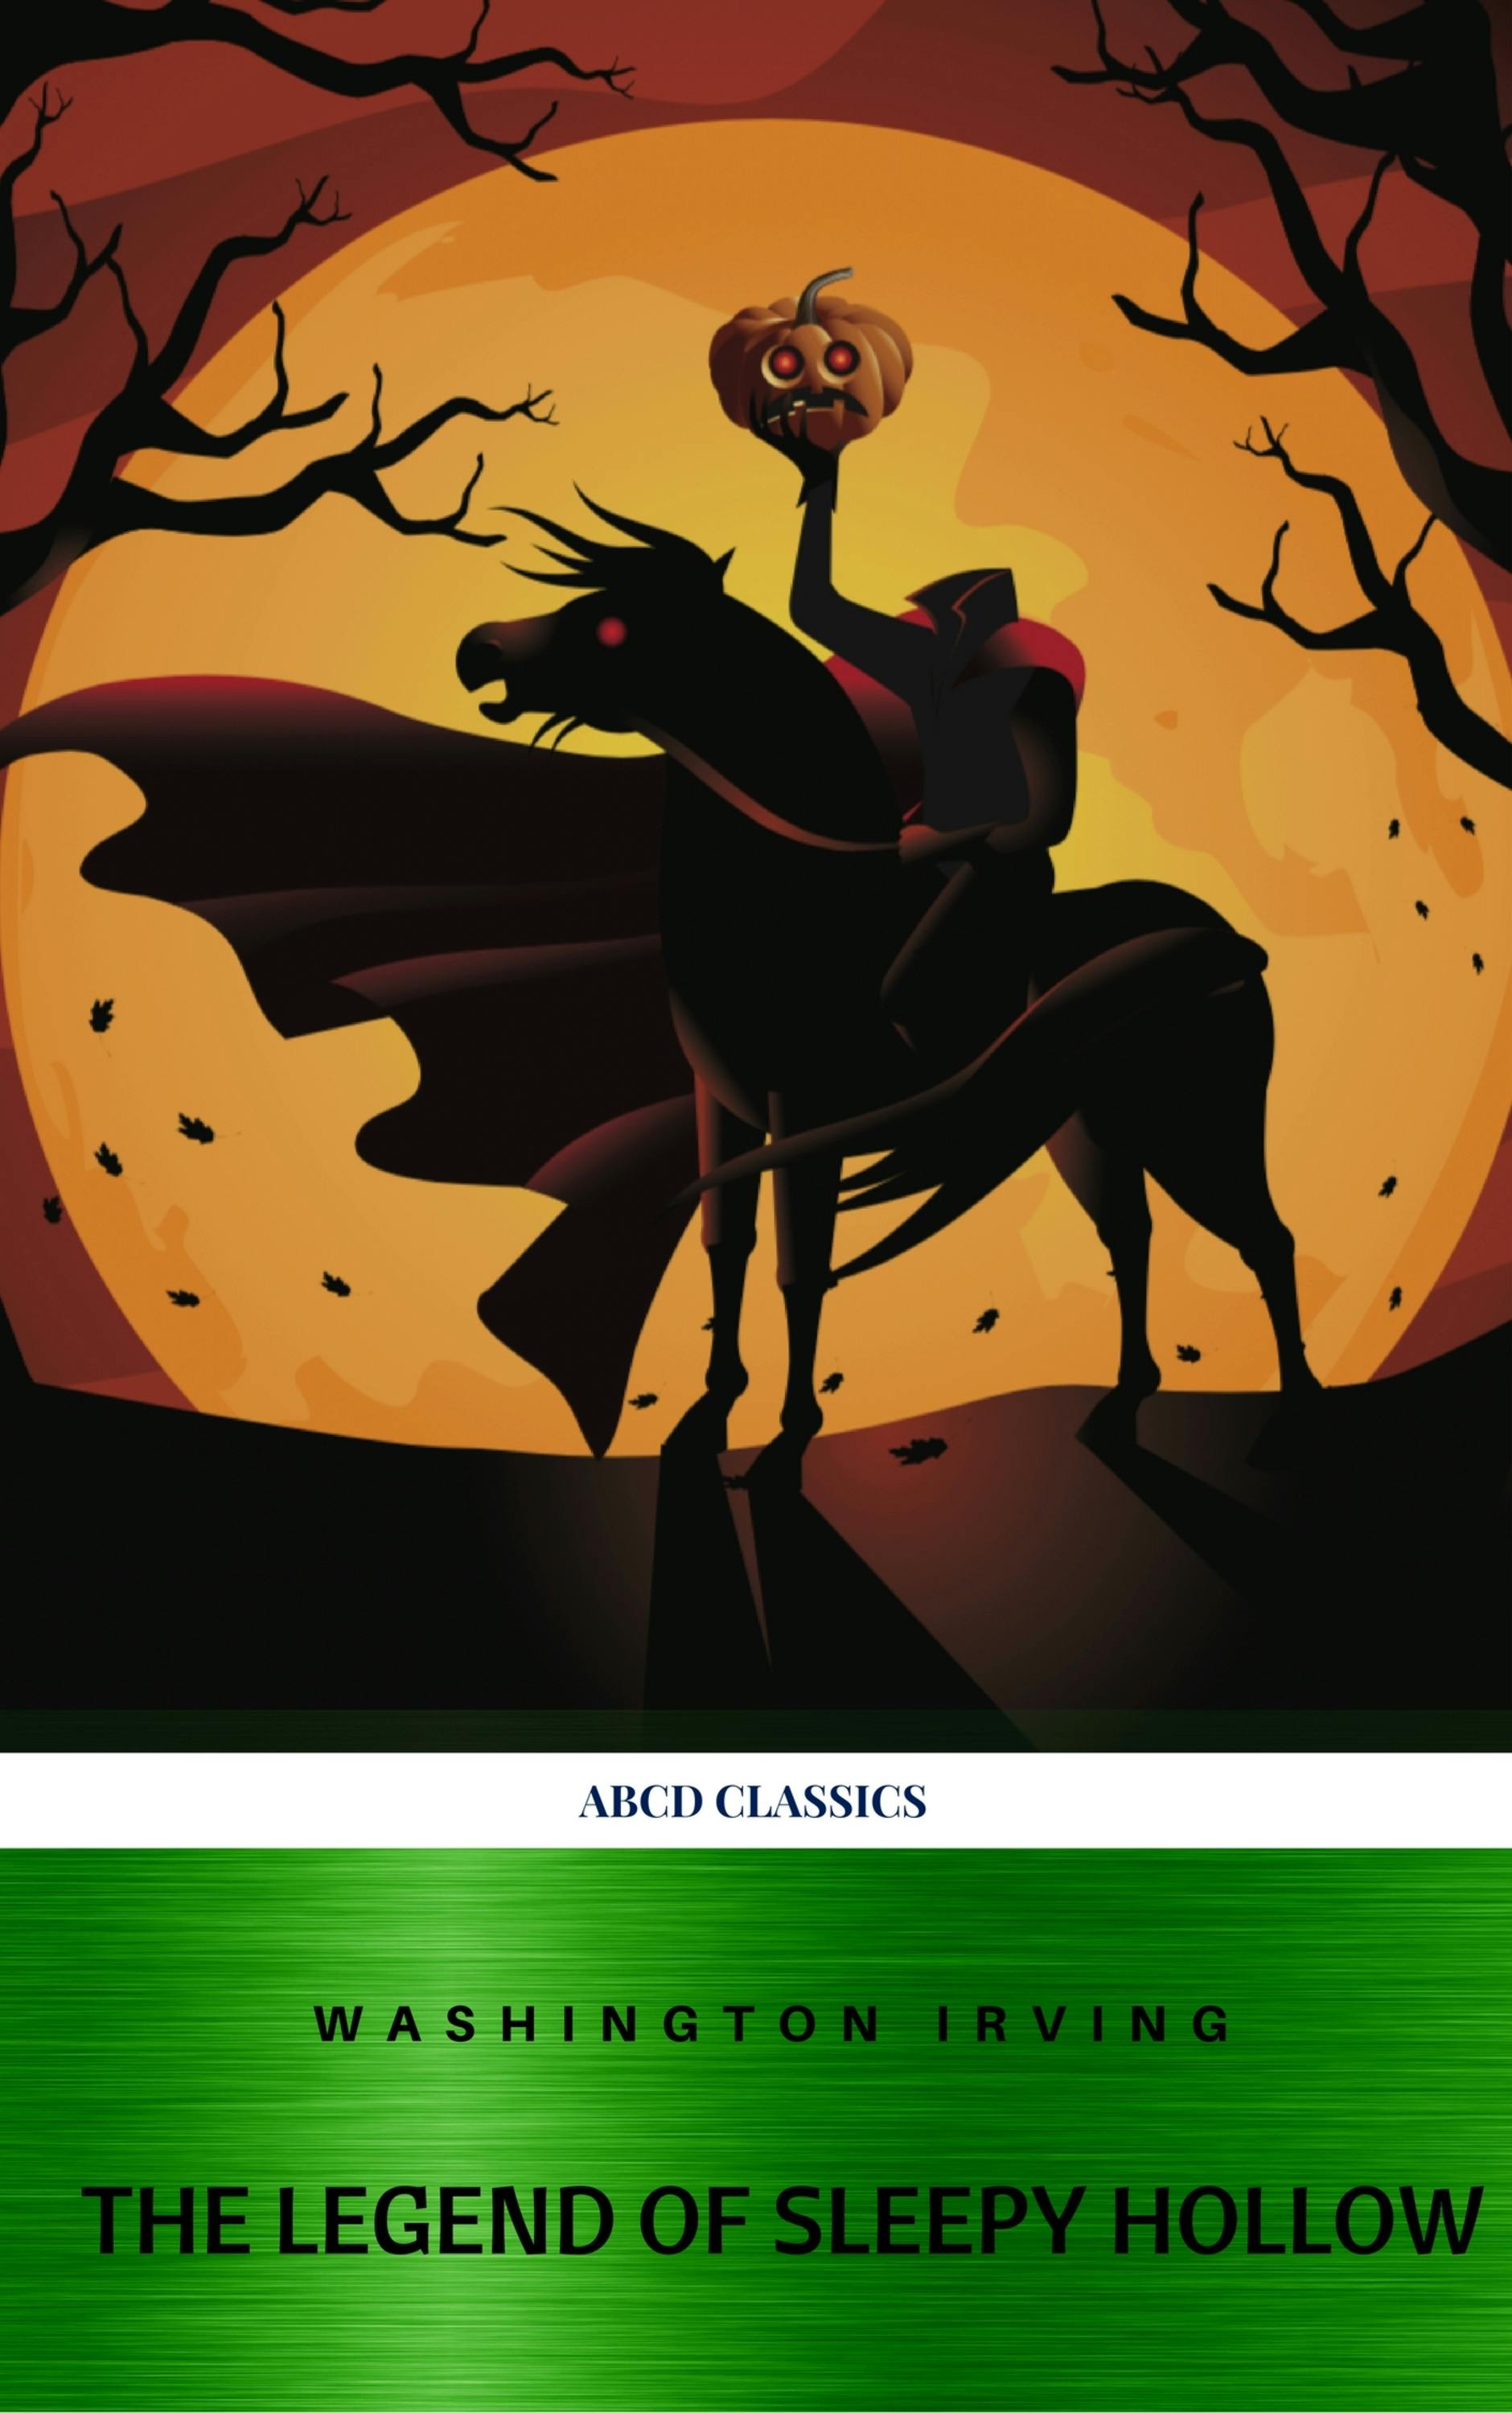 The Legend of Sleepy Hollow - ABCD Classics, Washington Irving